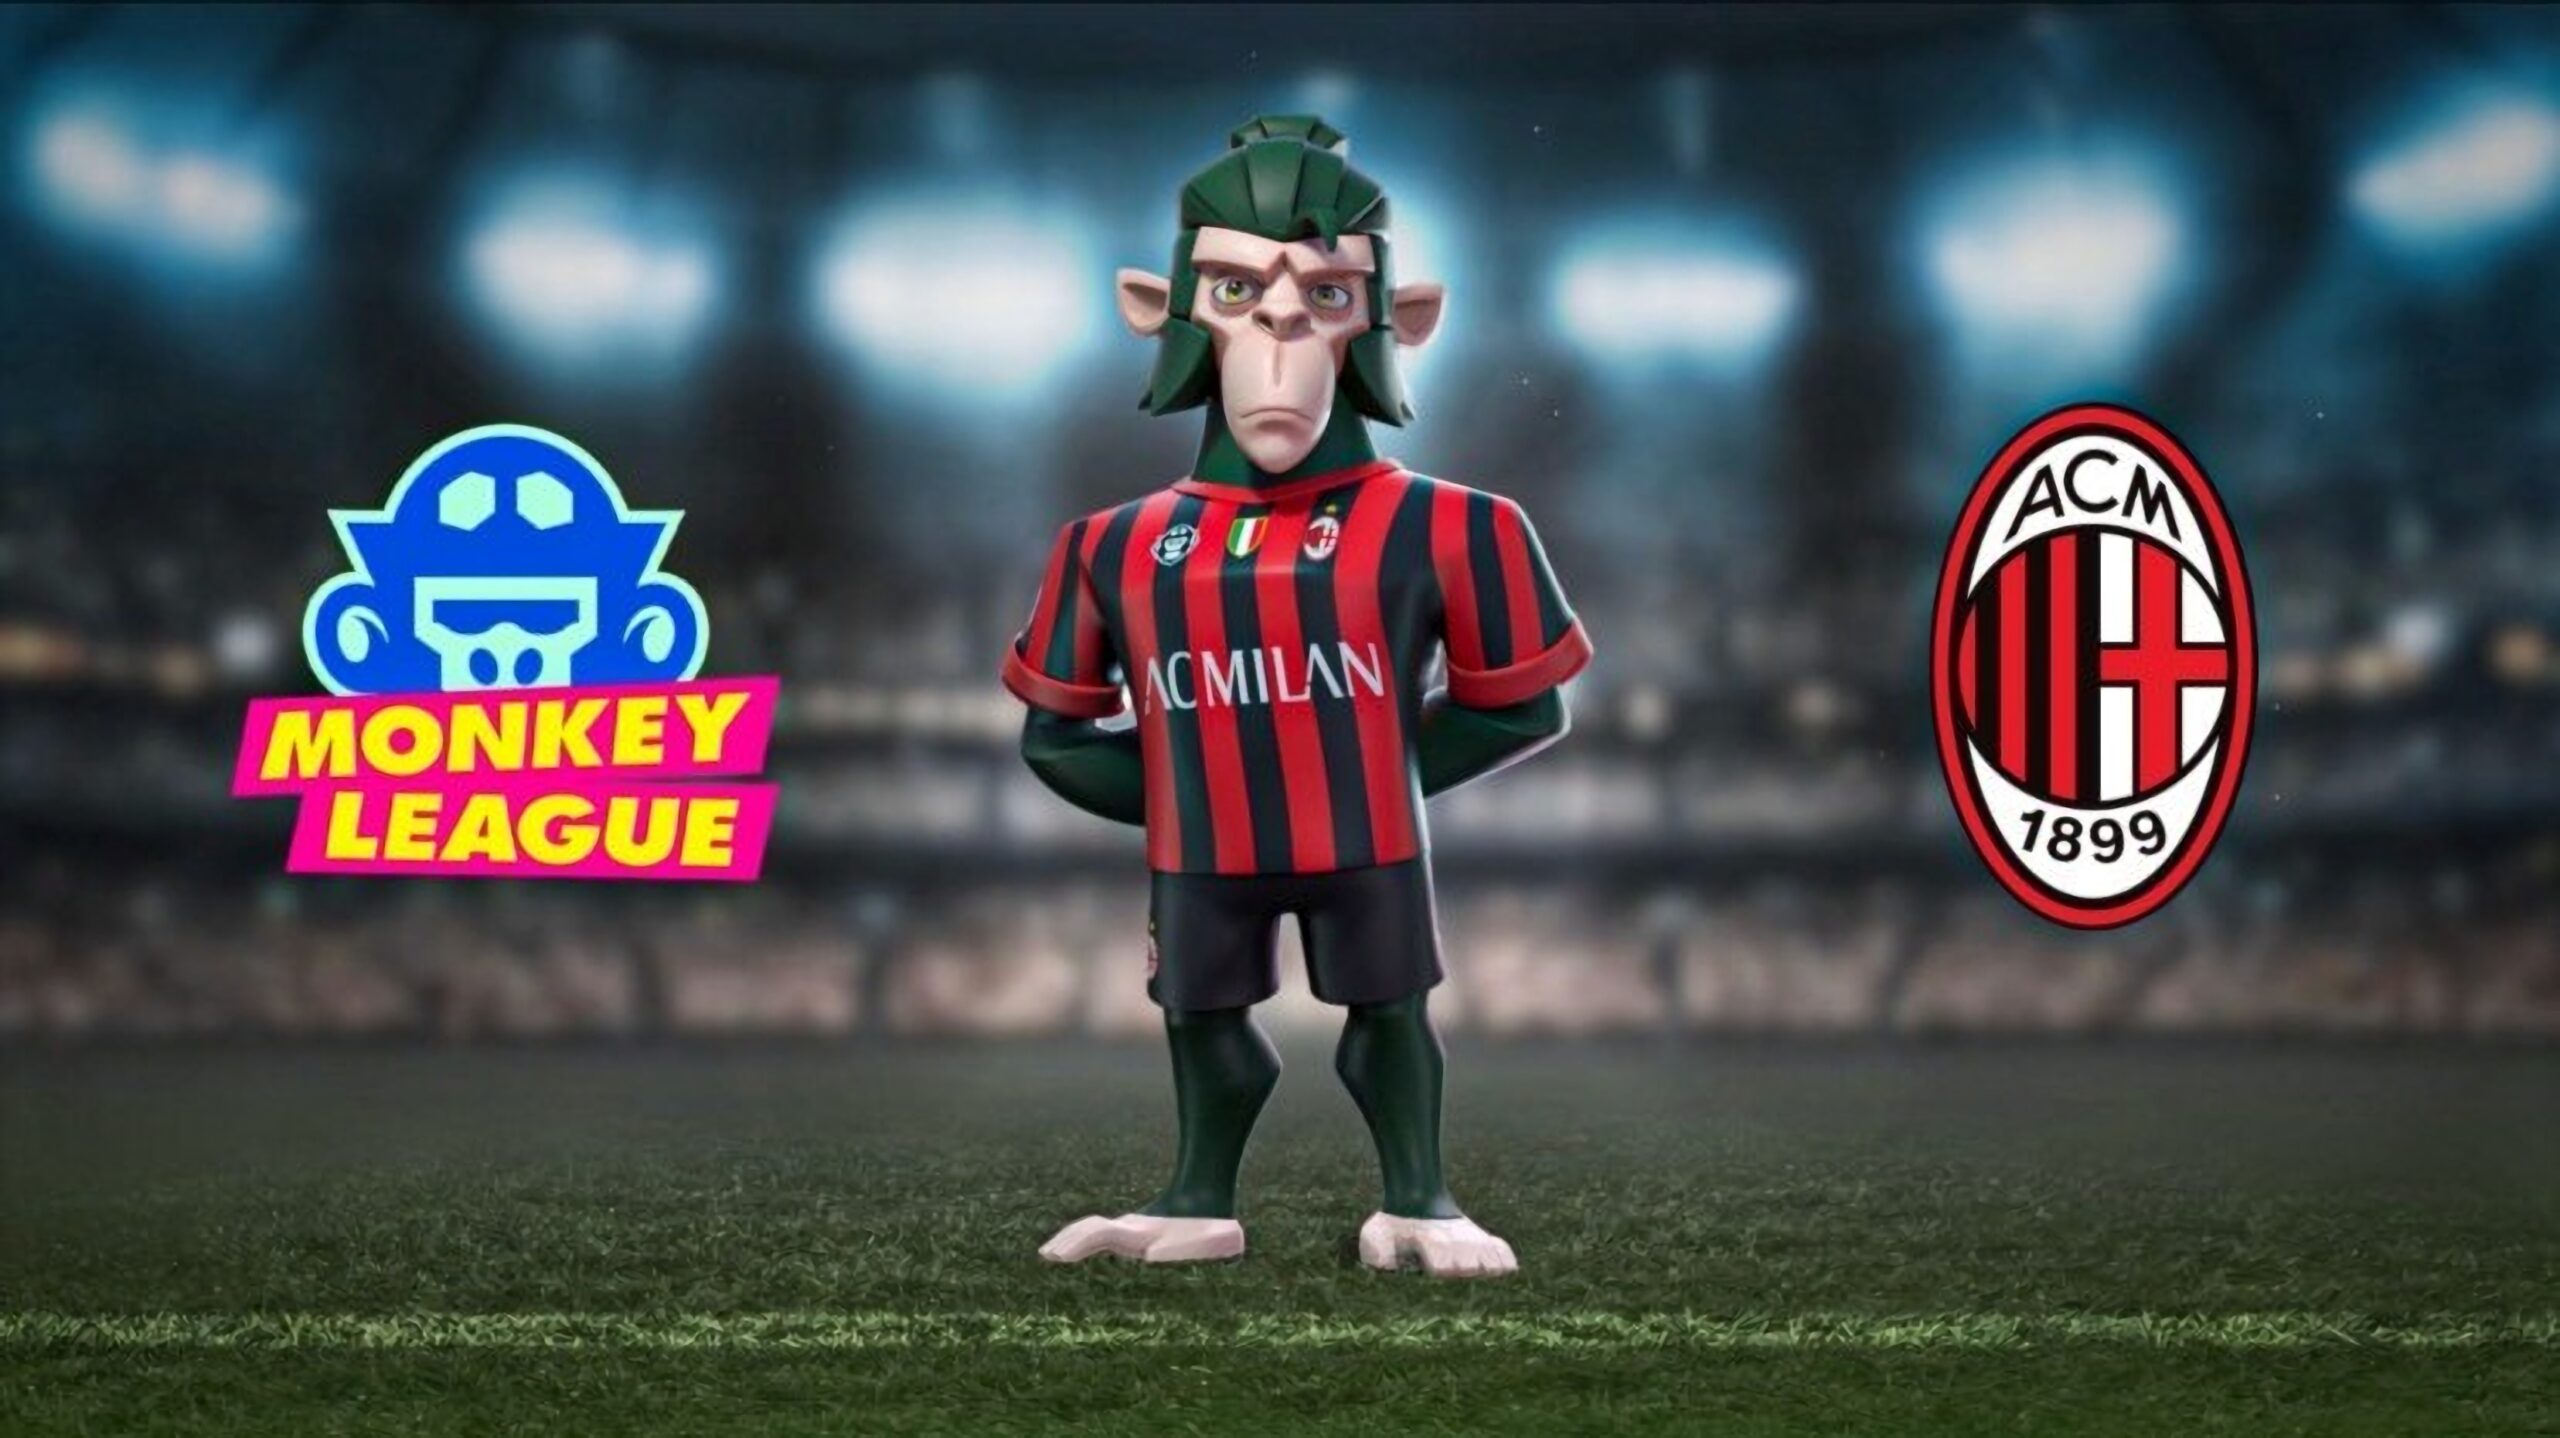 Ac-Milan-Scimmie-NFT-Monkey-League-sponsor-partnership